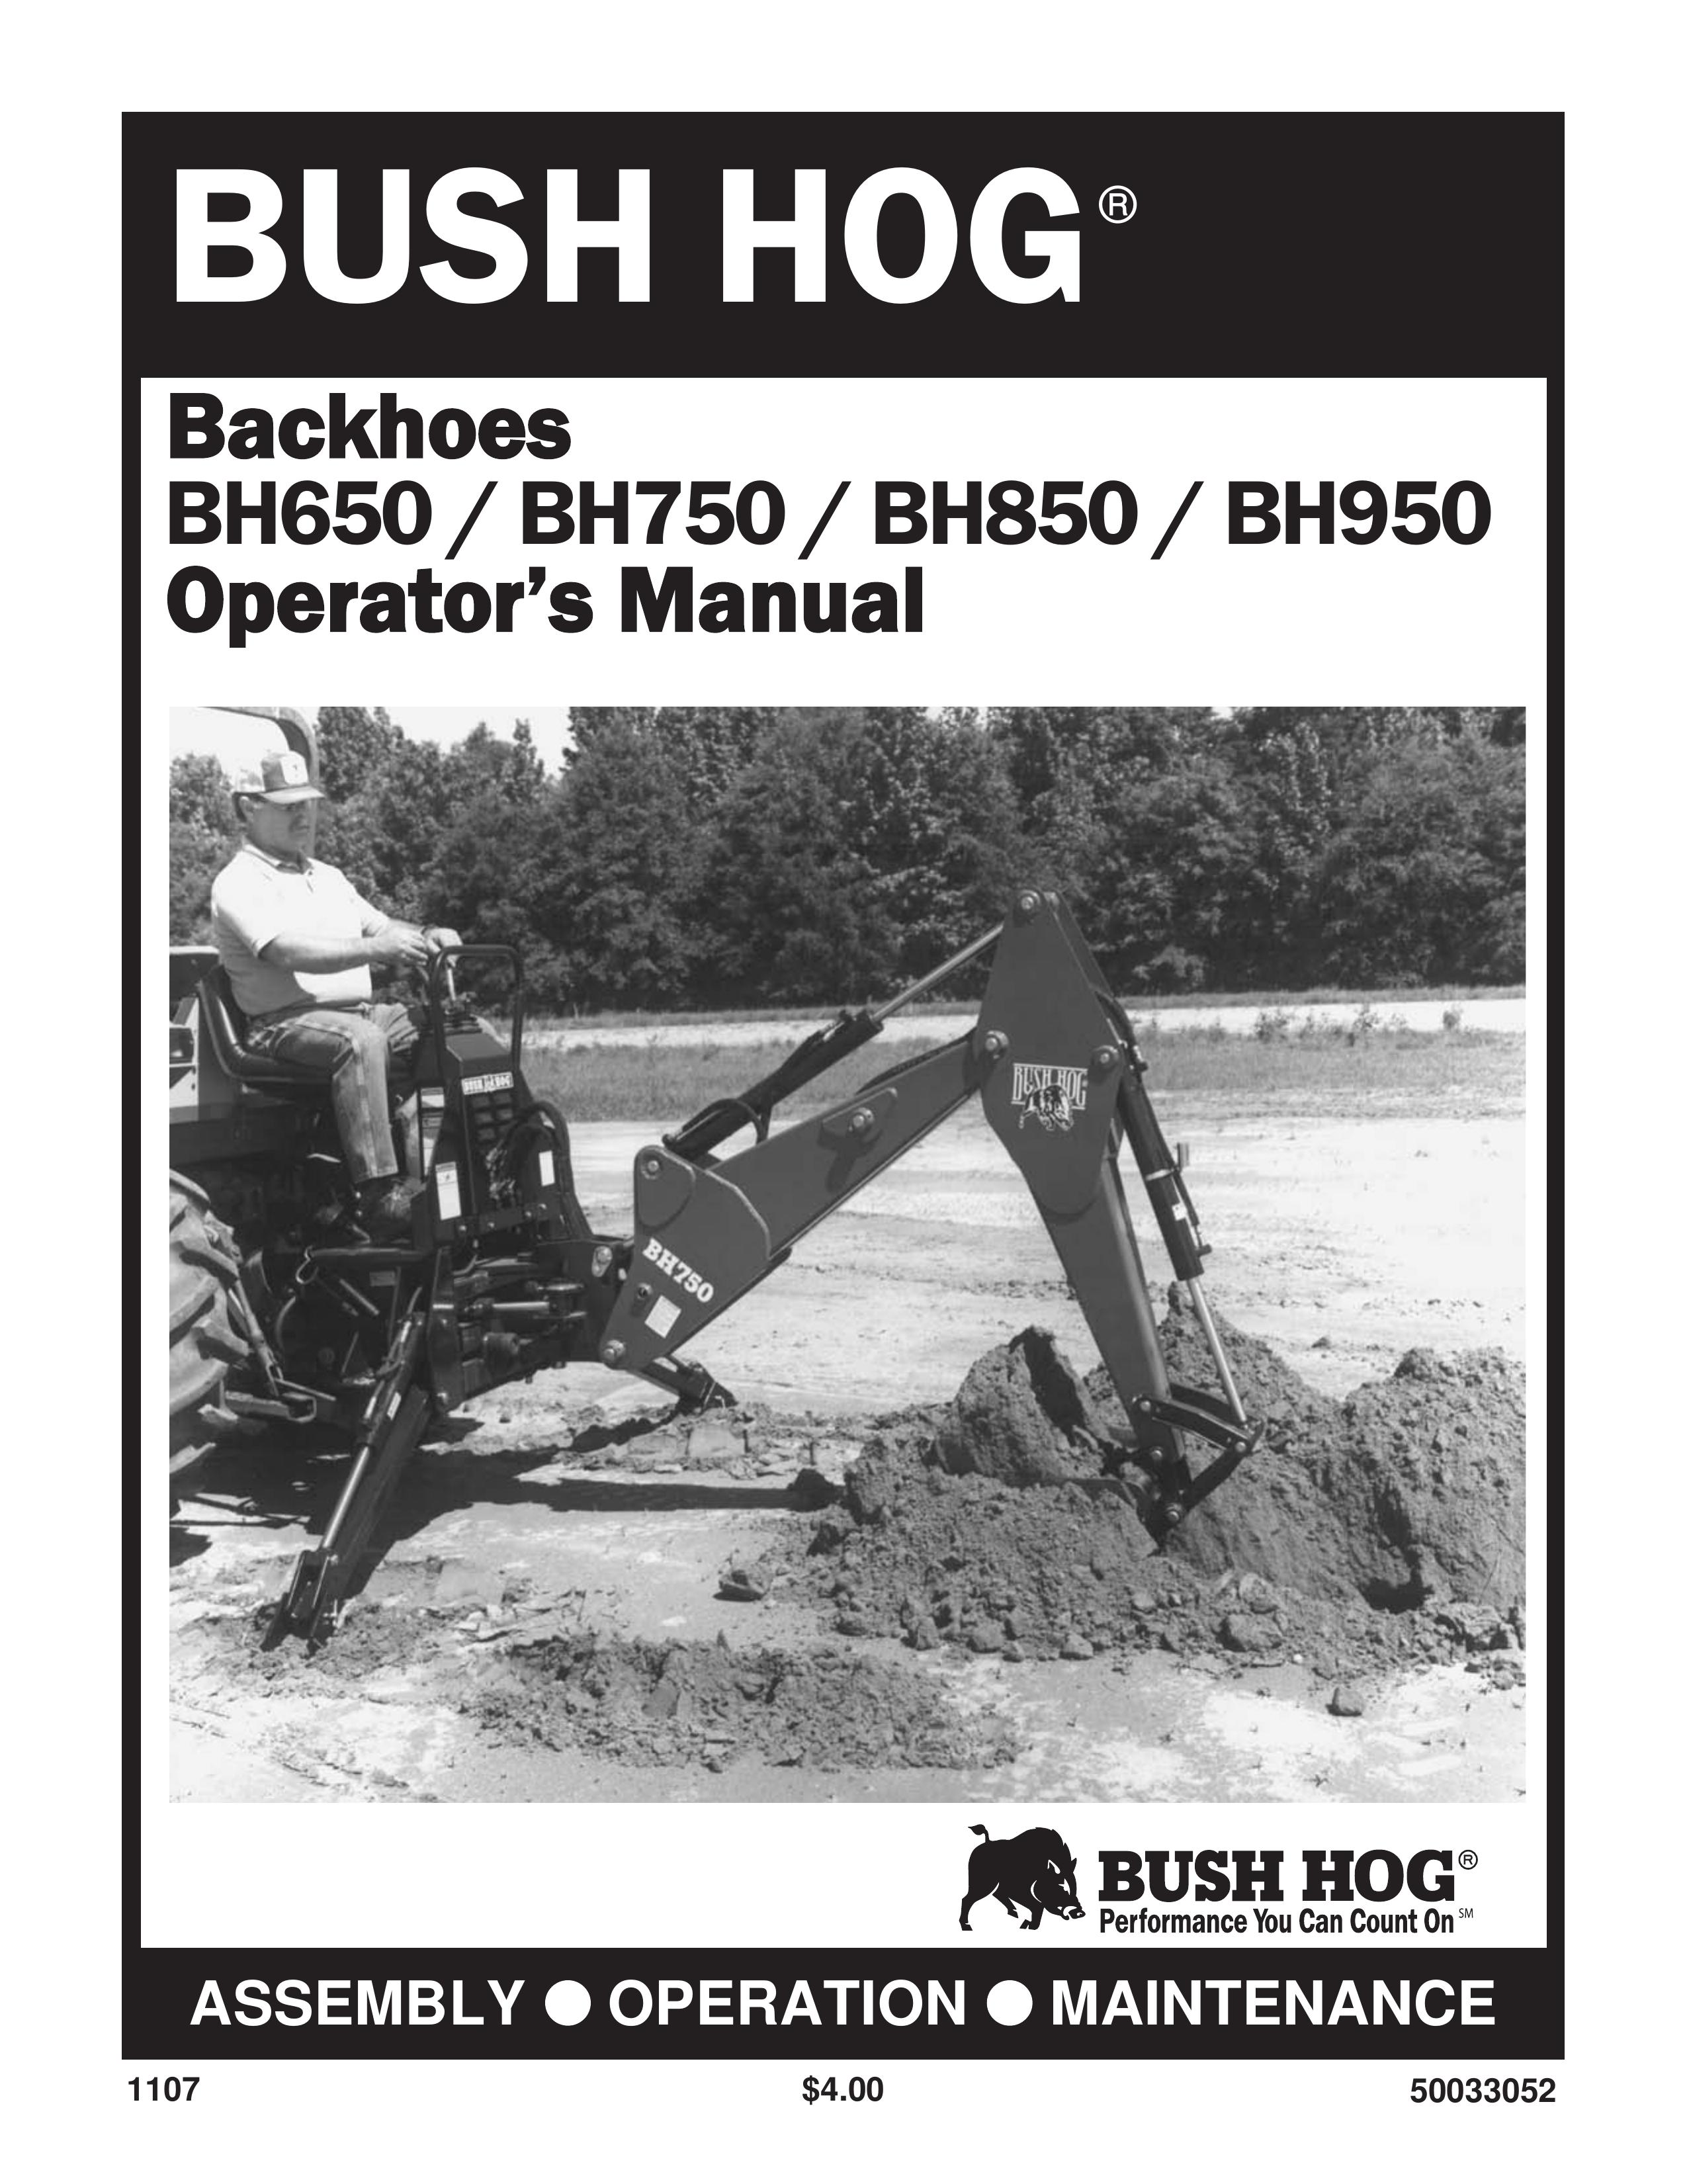 Bush Hog BH850 Lawn Mower User Manual